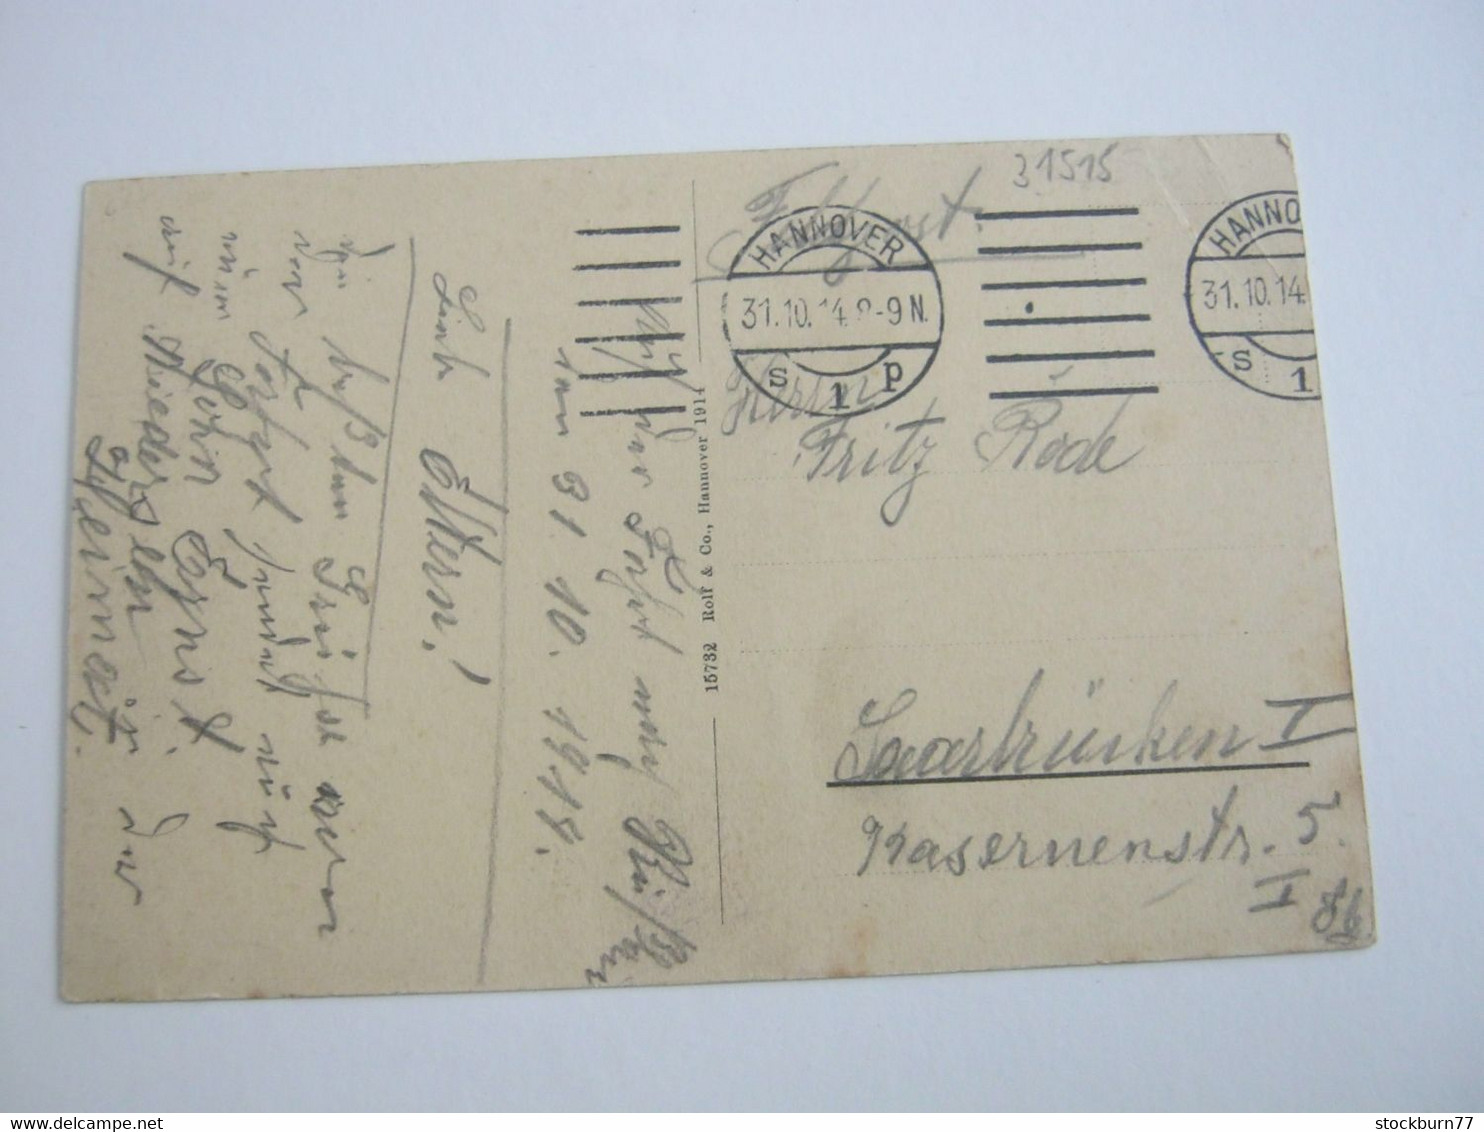 WUNSTORF , Bahnhof  , Seltene Karte Aus 1914 - Wunstorf